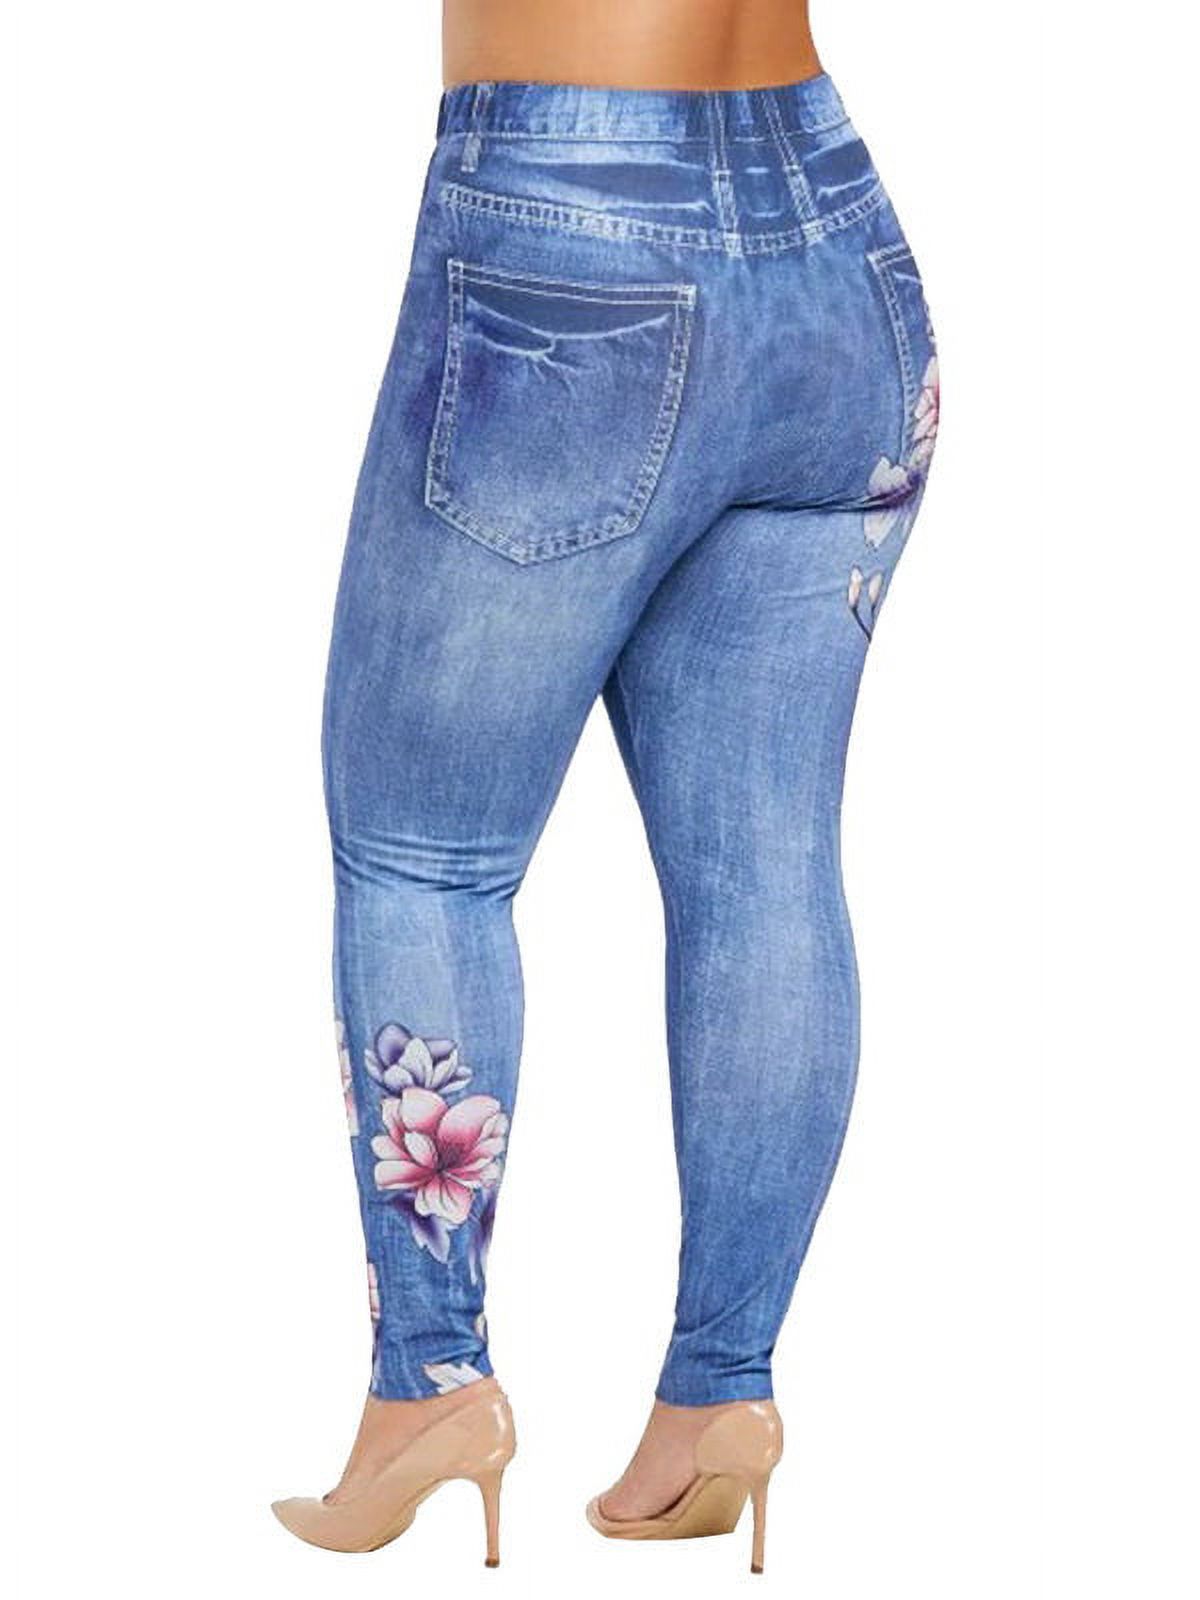 Julycc Women Casual 3D Denim Plus Size Floral Print Leggings - image 4 of 4